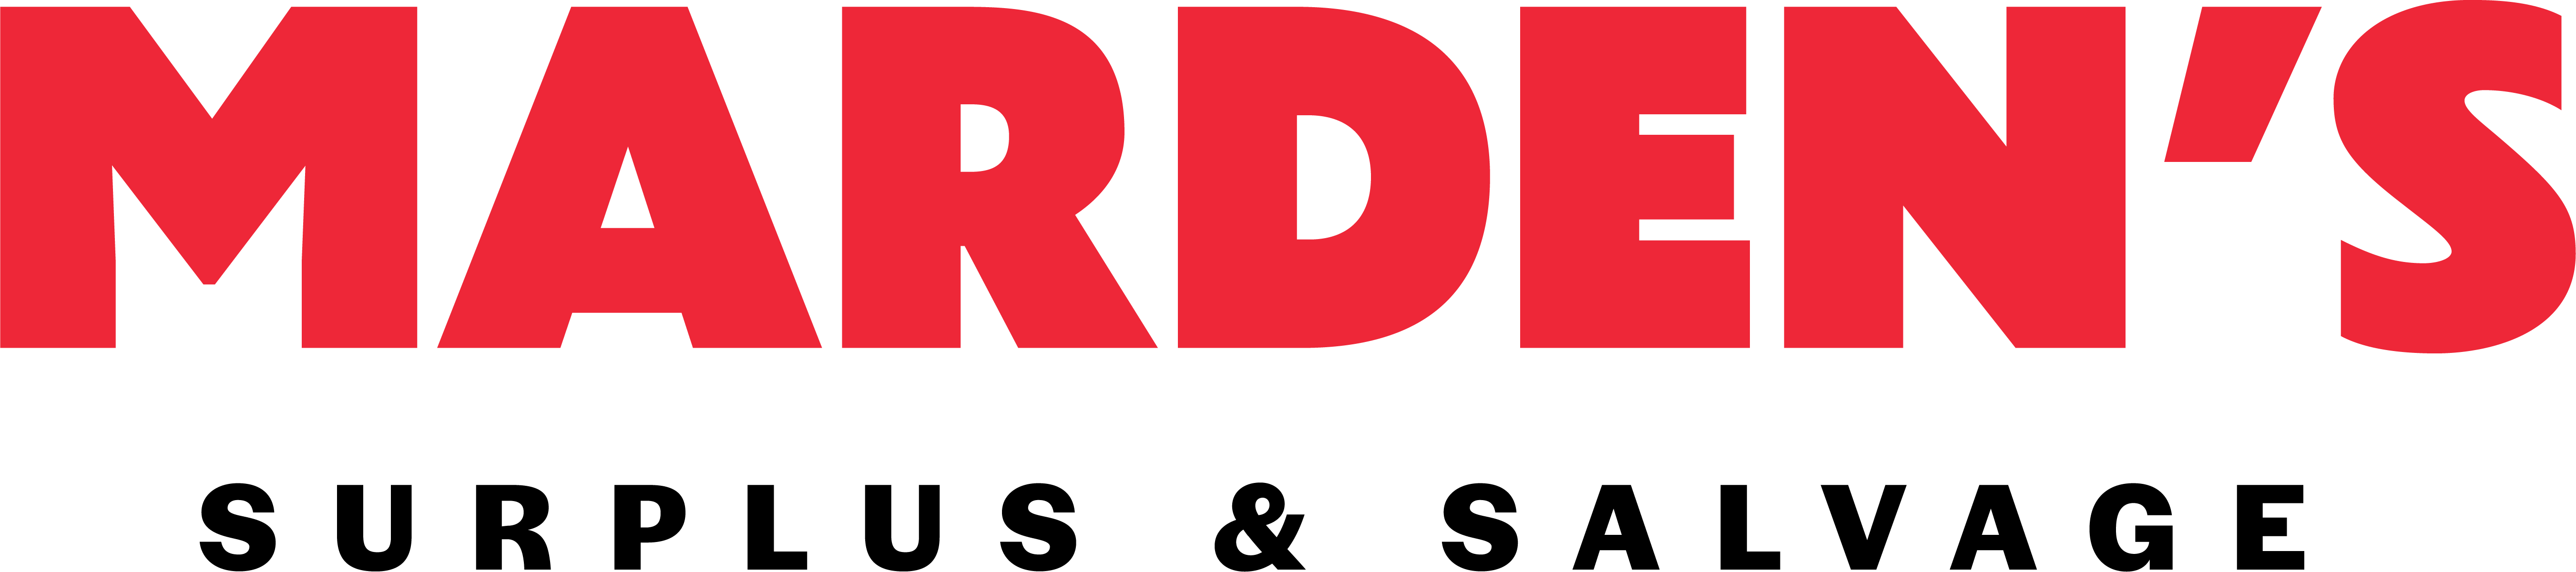 mardens logo